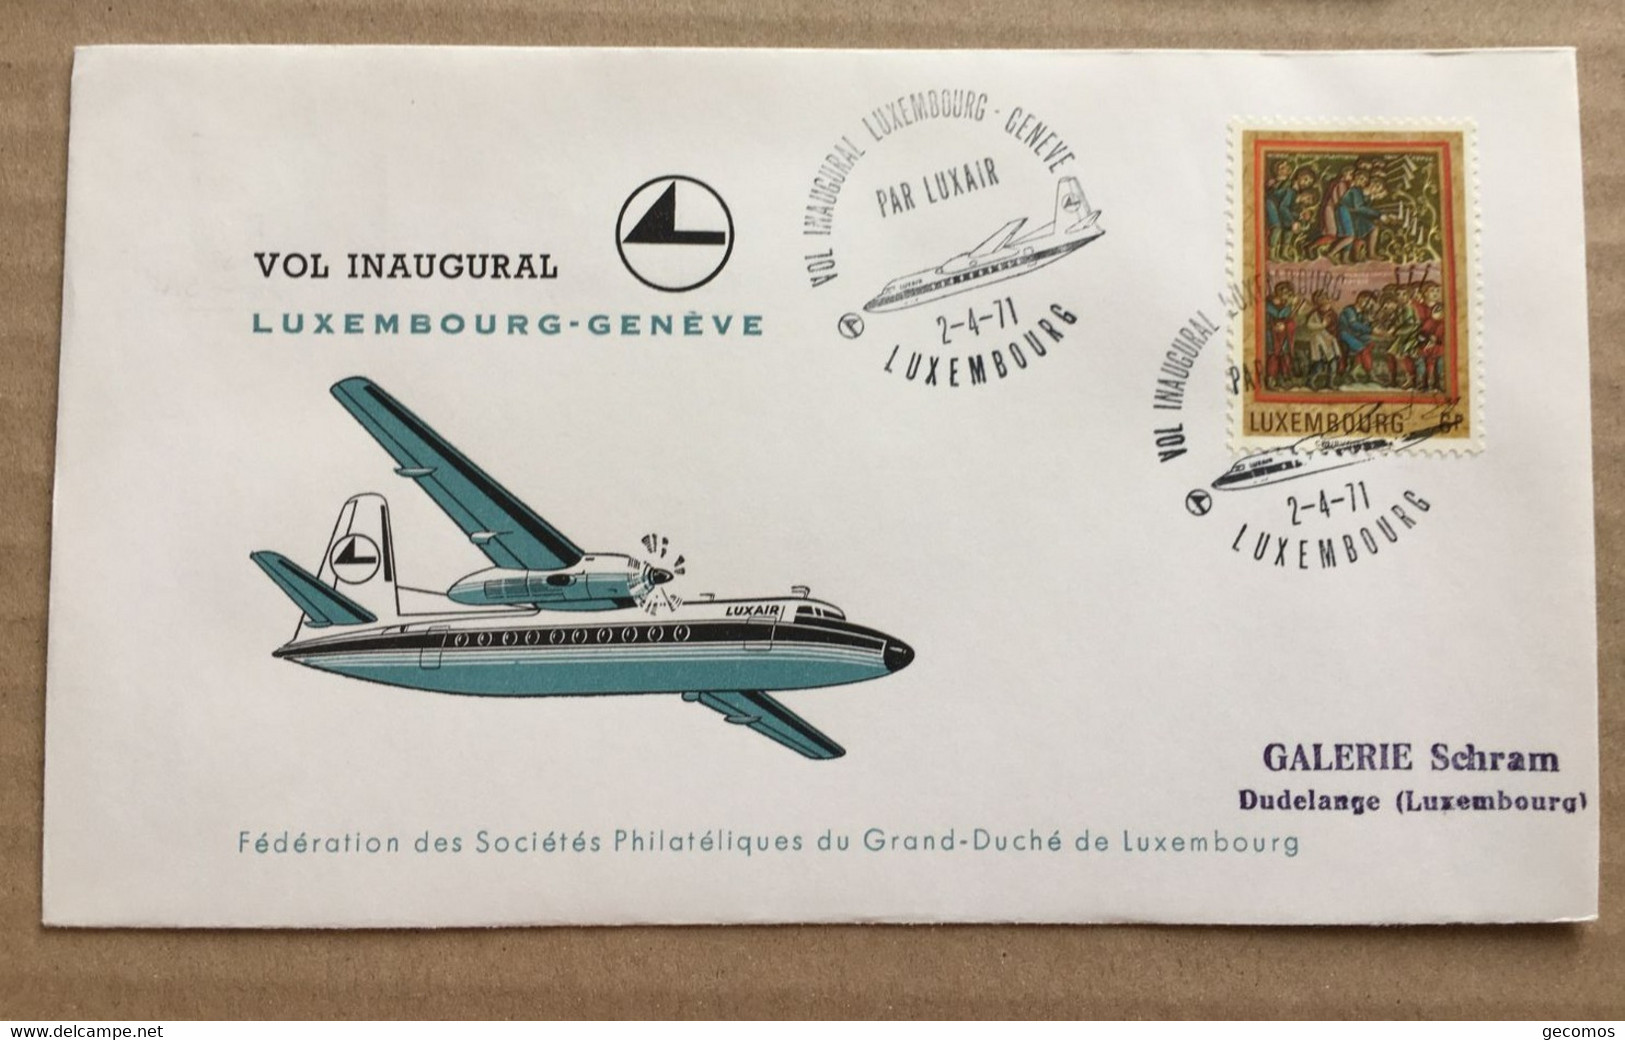 VOL INAUGURAL LUXEMBOURG-GENEVE 2-4-71 - (Avion LUXAIR.) - Cartas & Documentos